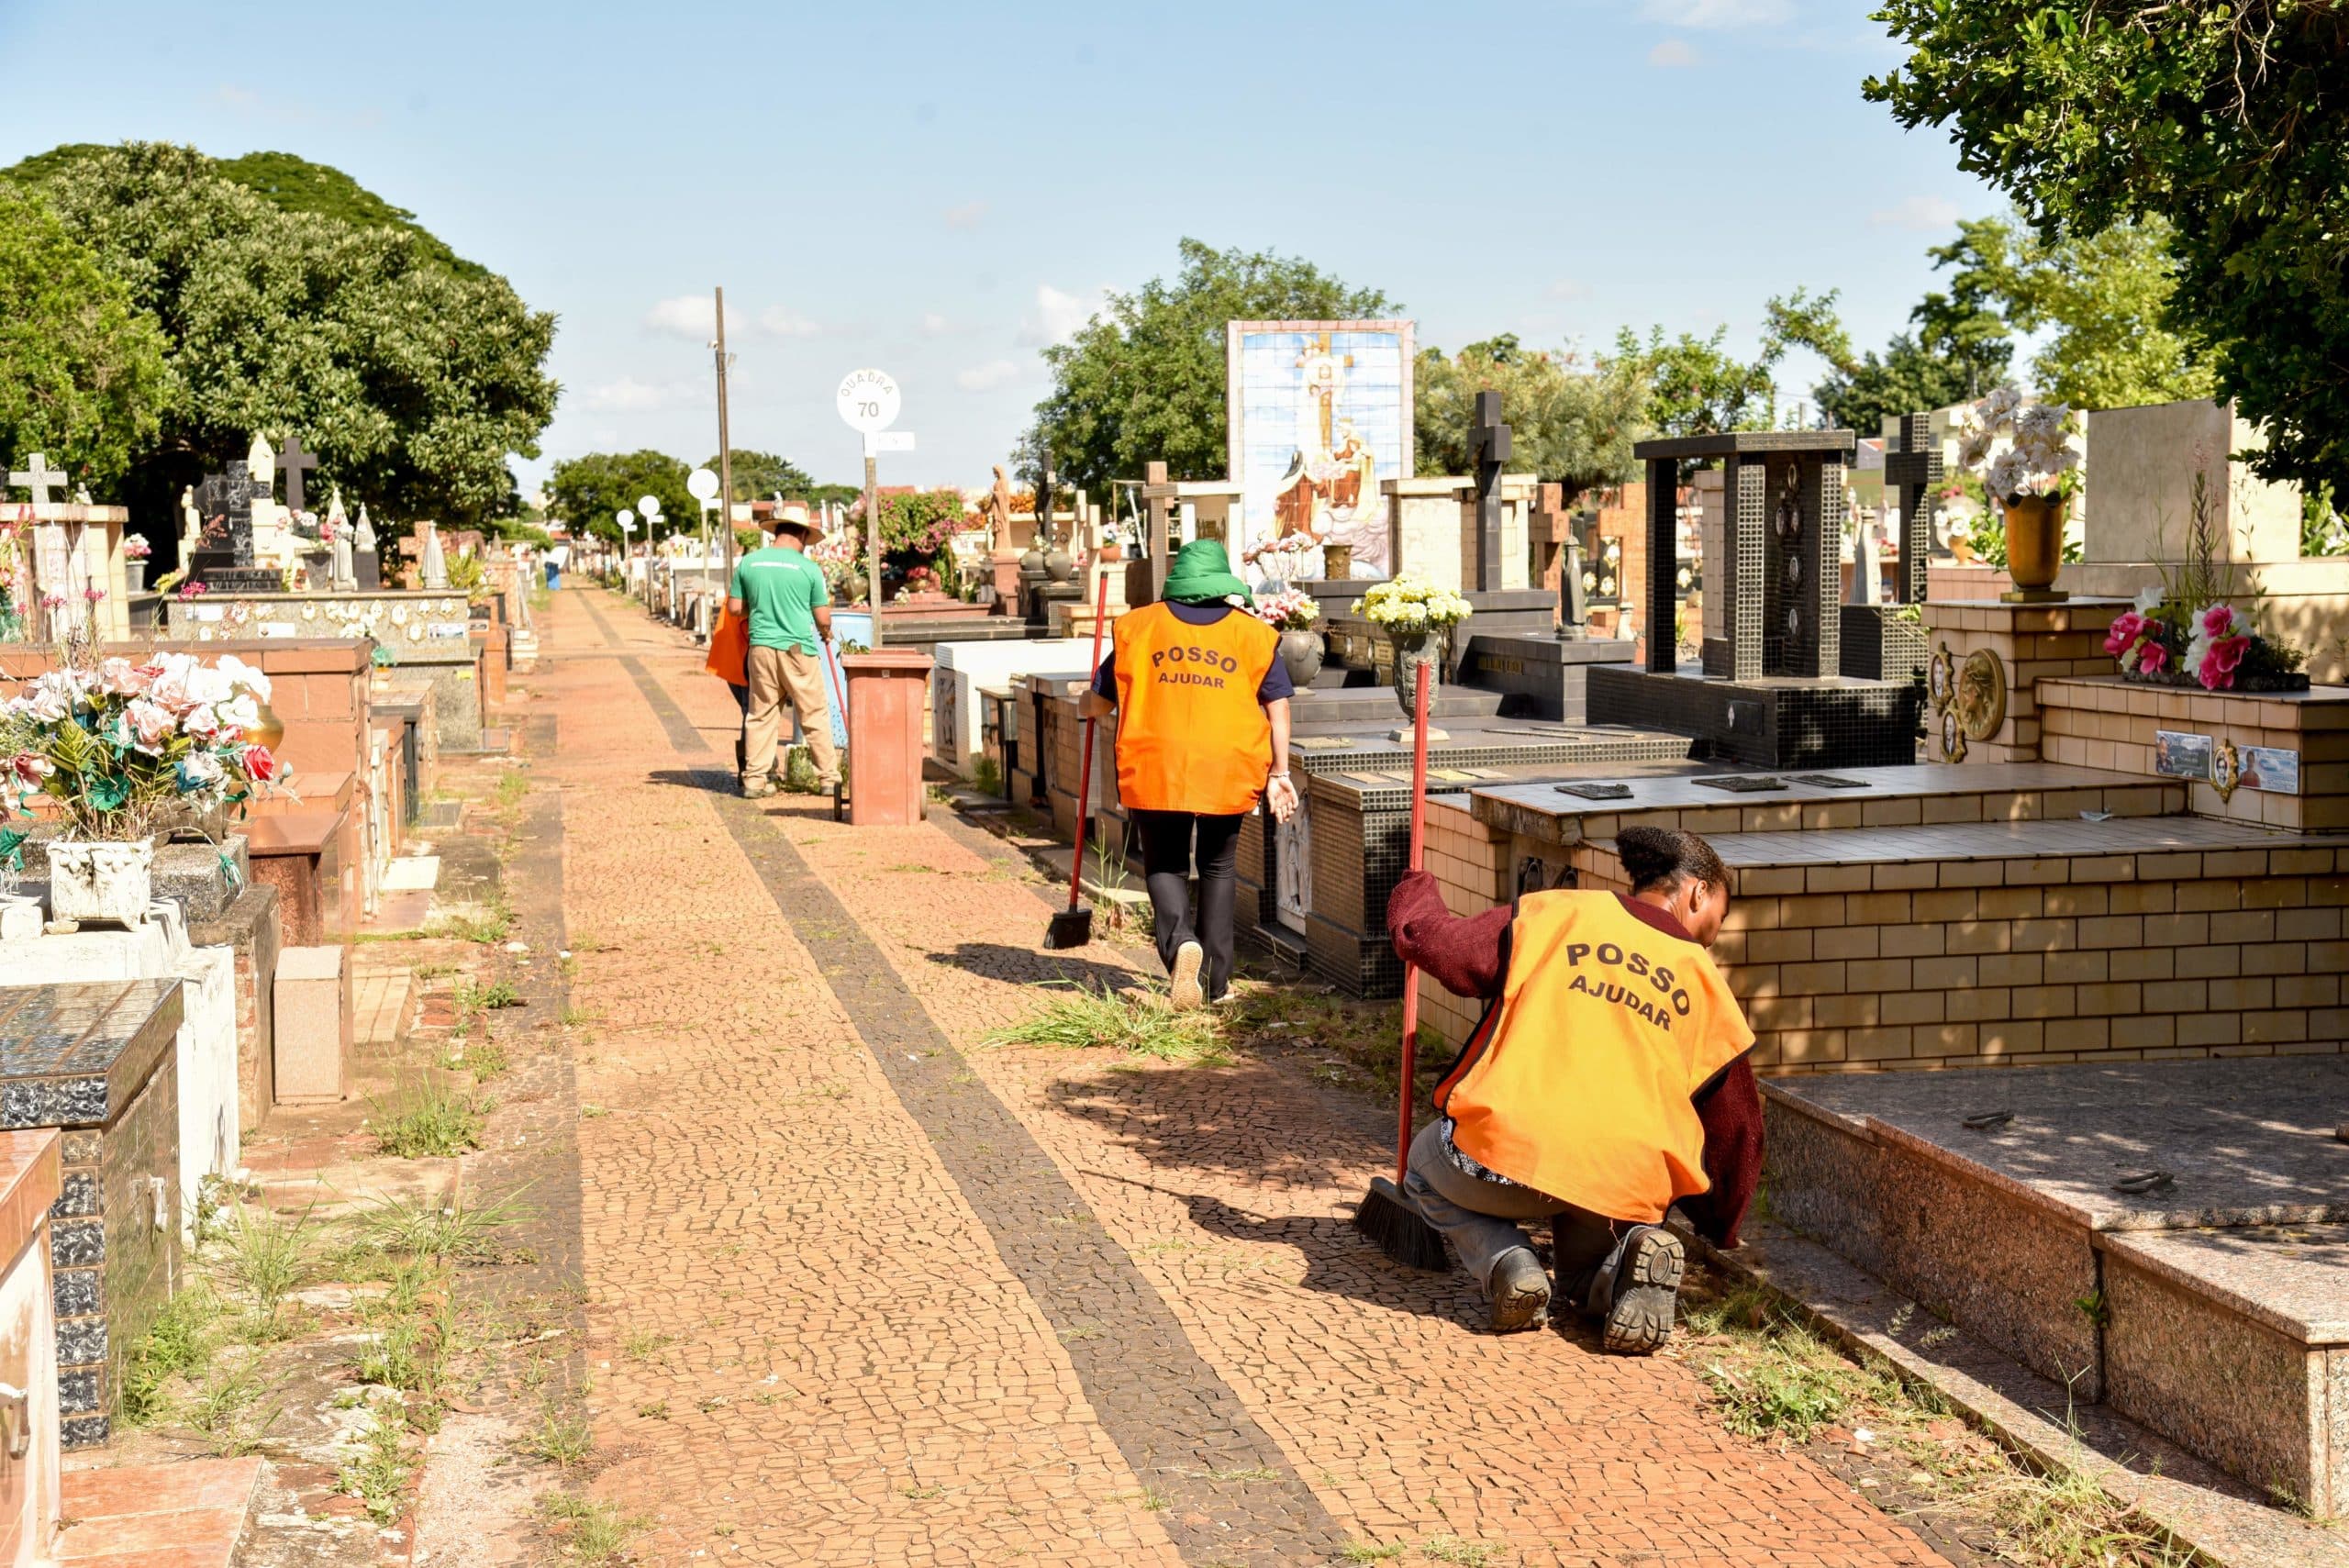 Prefeitura amplia equipe para limpeza no cemitério